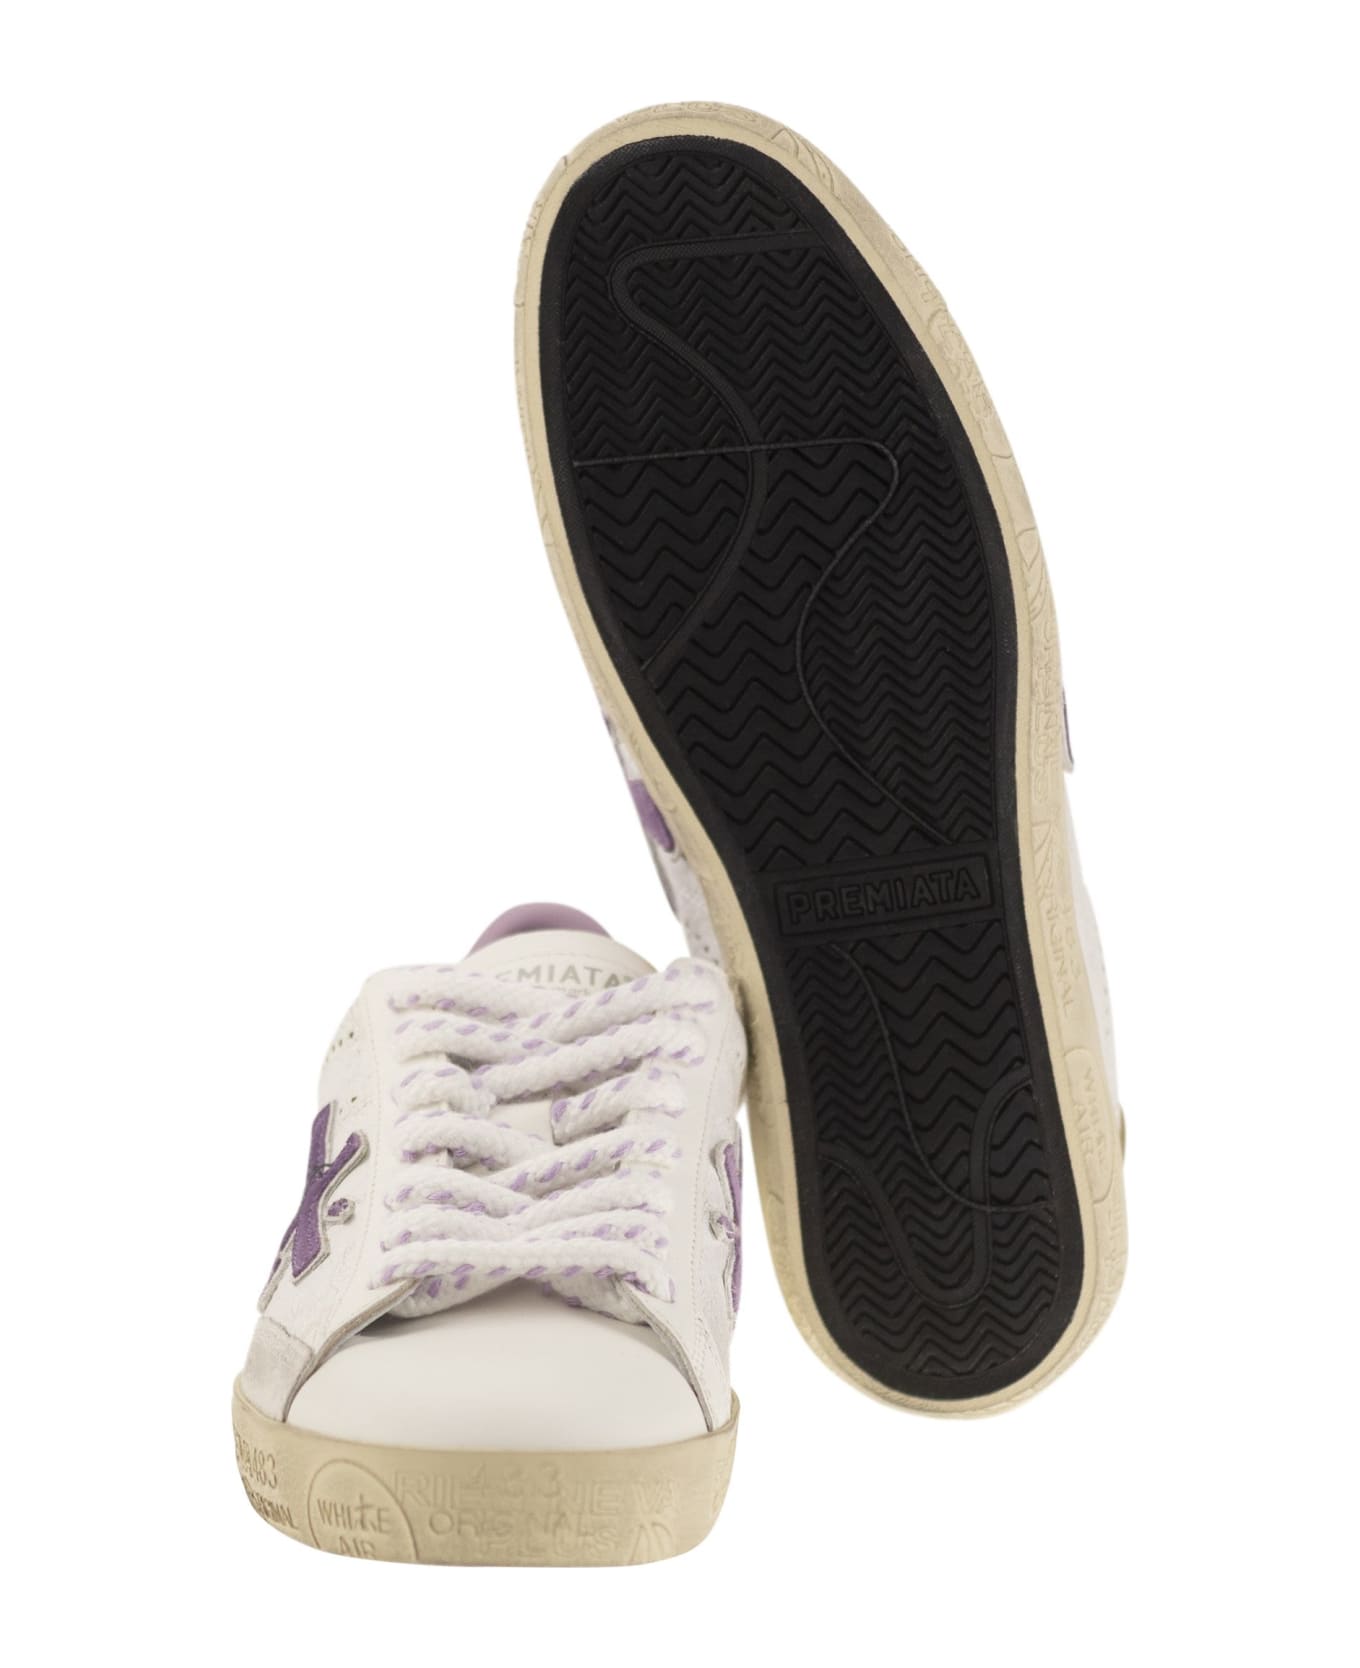 Premiata Steven-d - Sneakers - White/purple